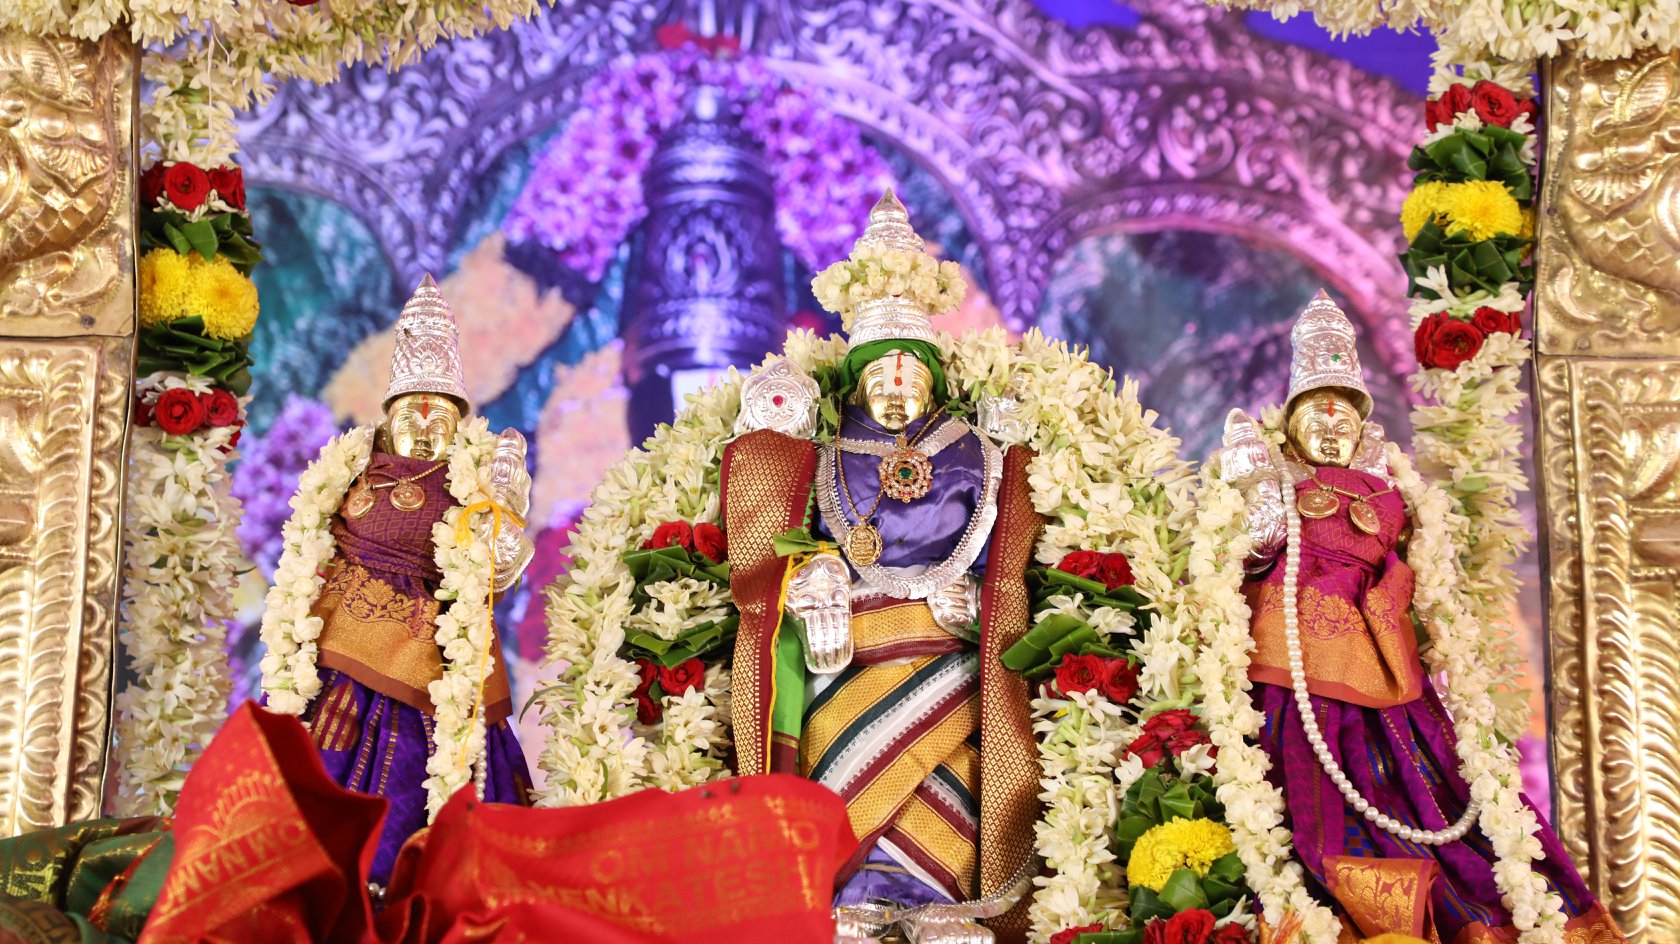 What did Adi Shankaracharya say about Sri Rangam?